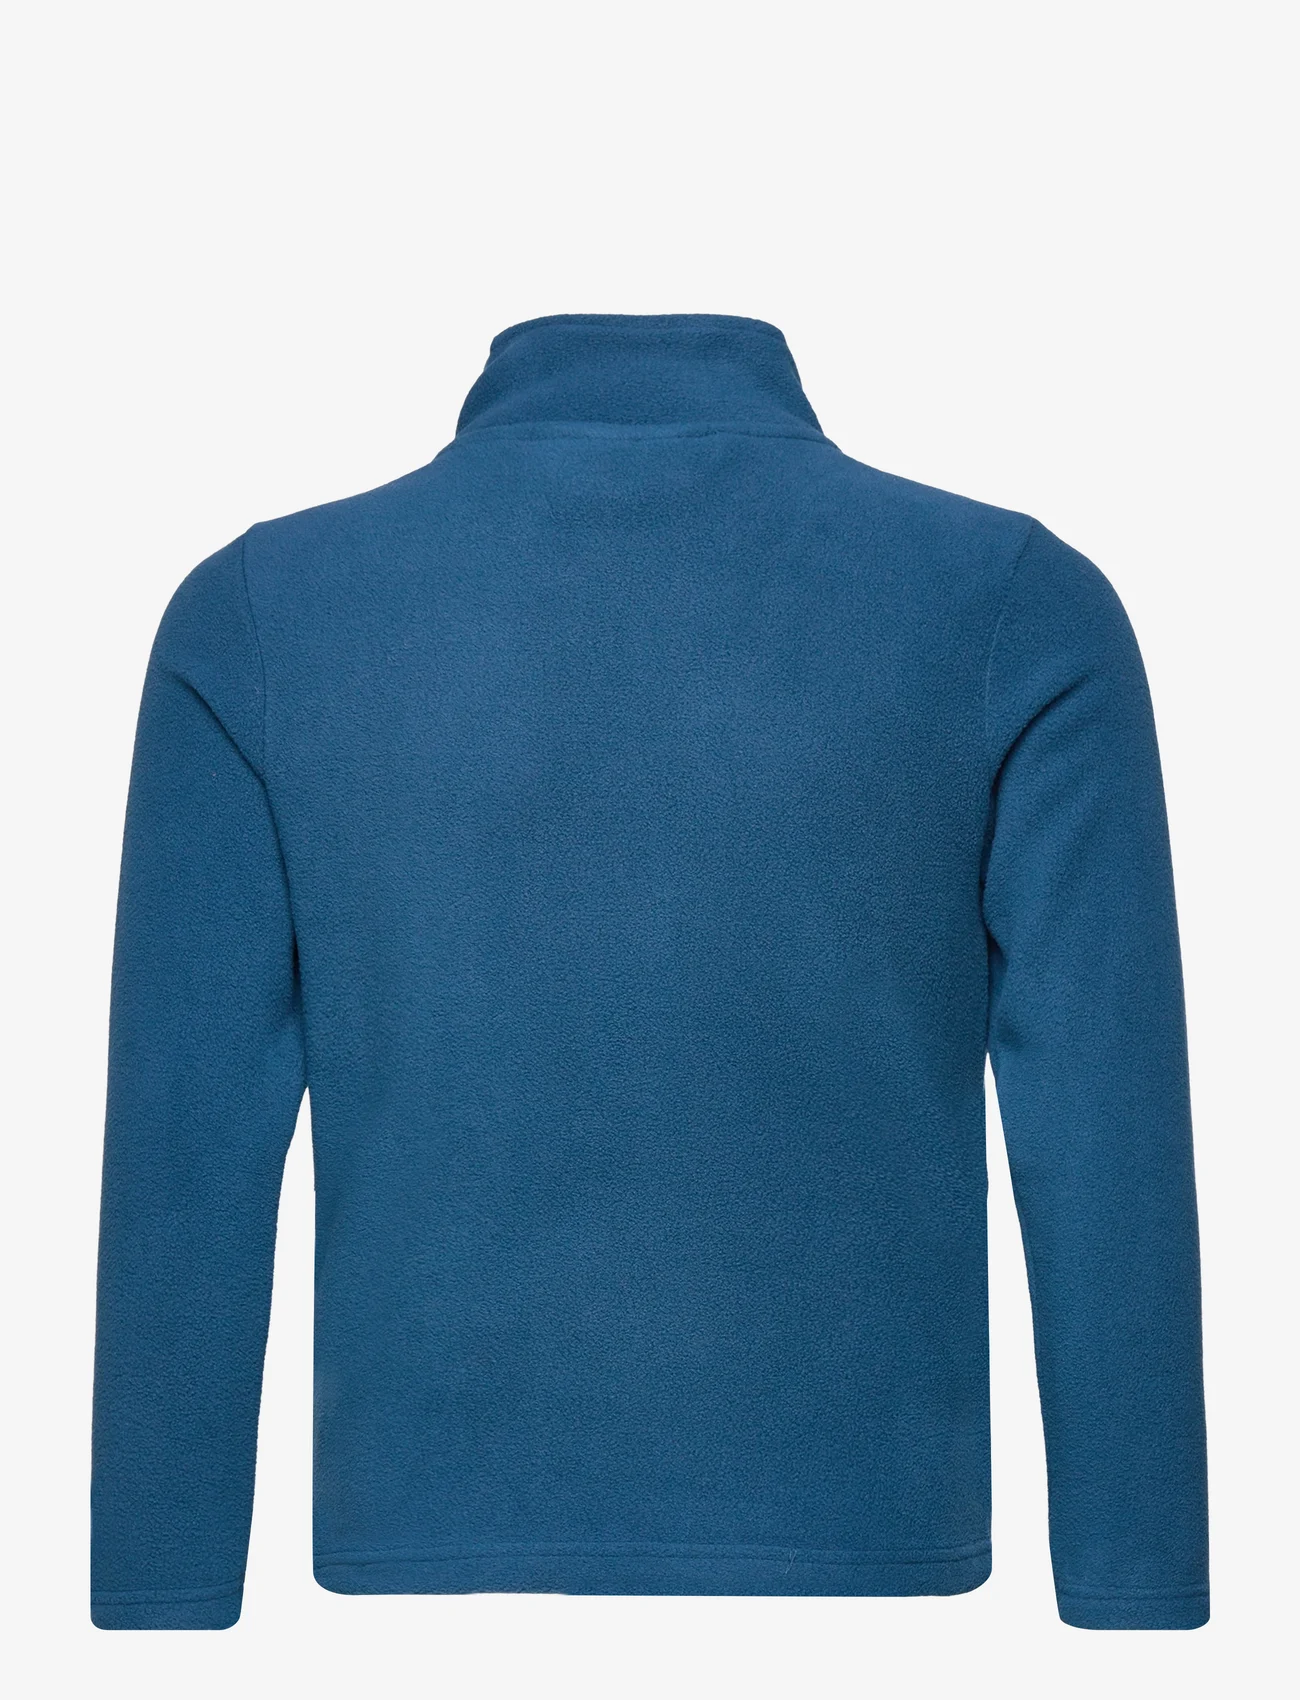 ZigZag - Zap Fleece Jacket - toppatakit - blue - 1